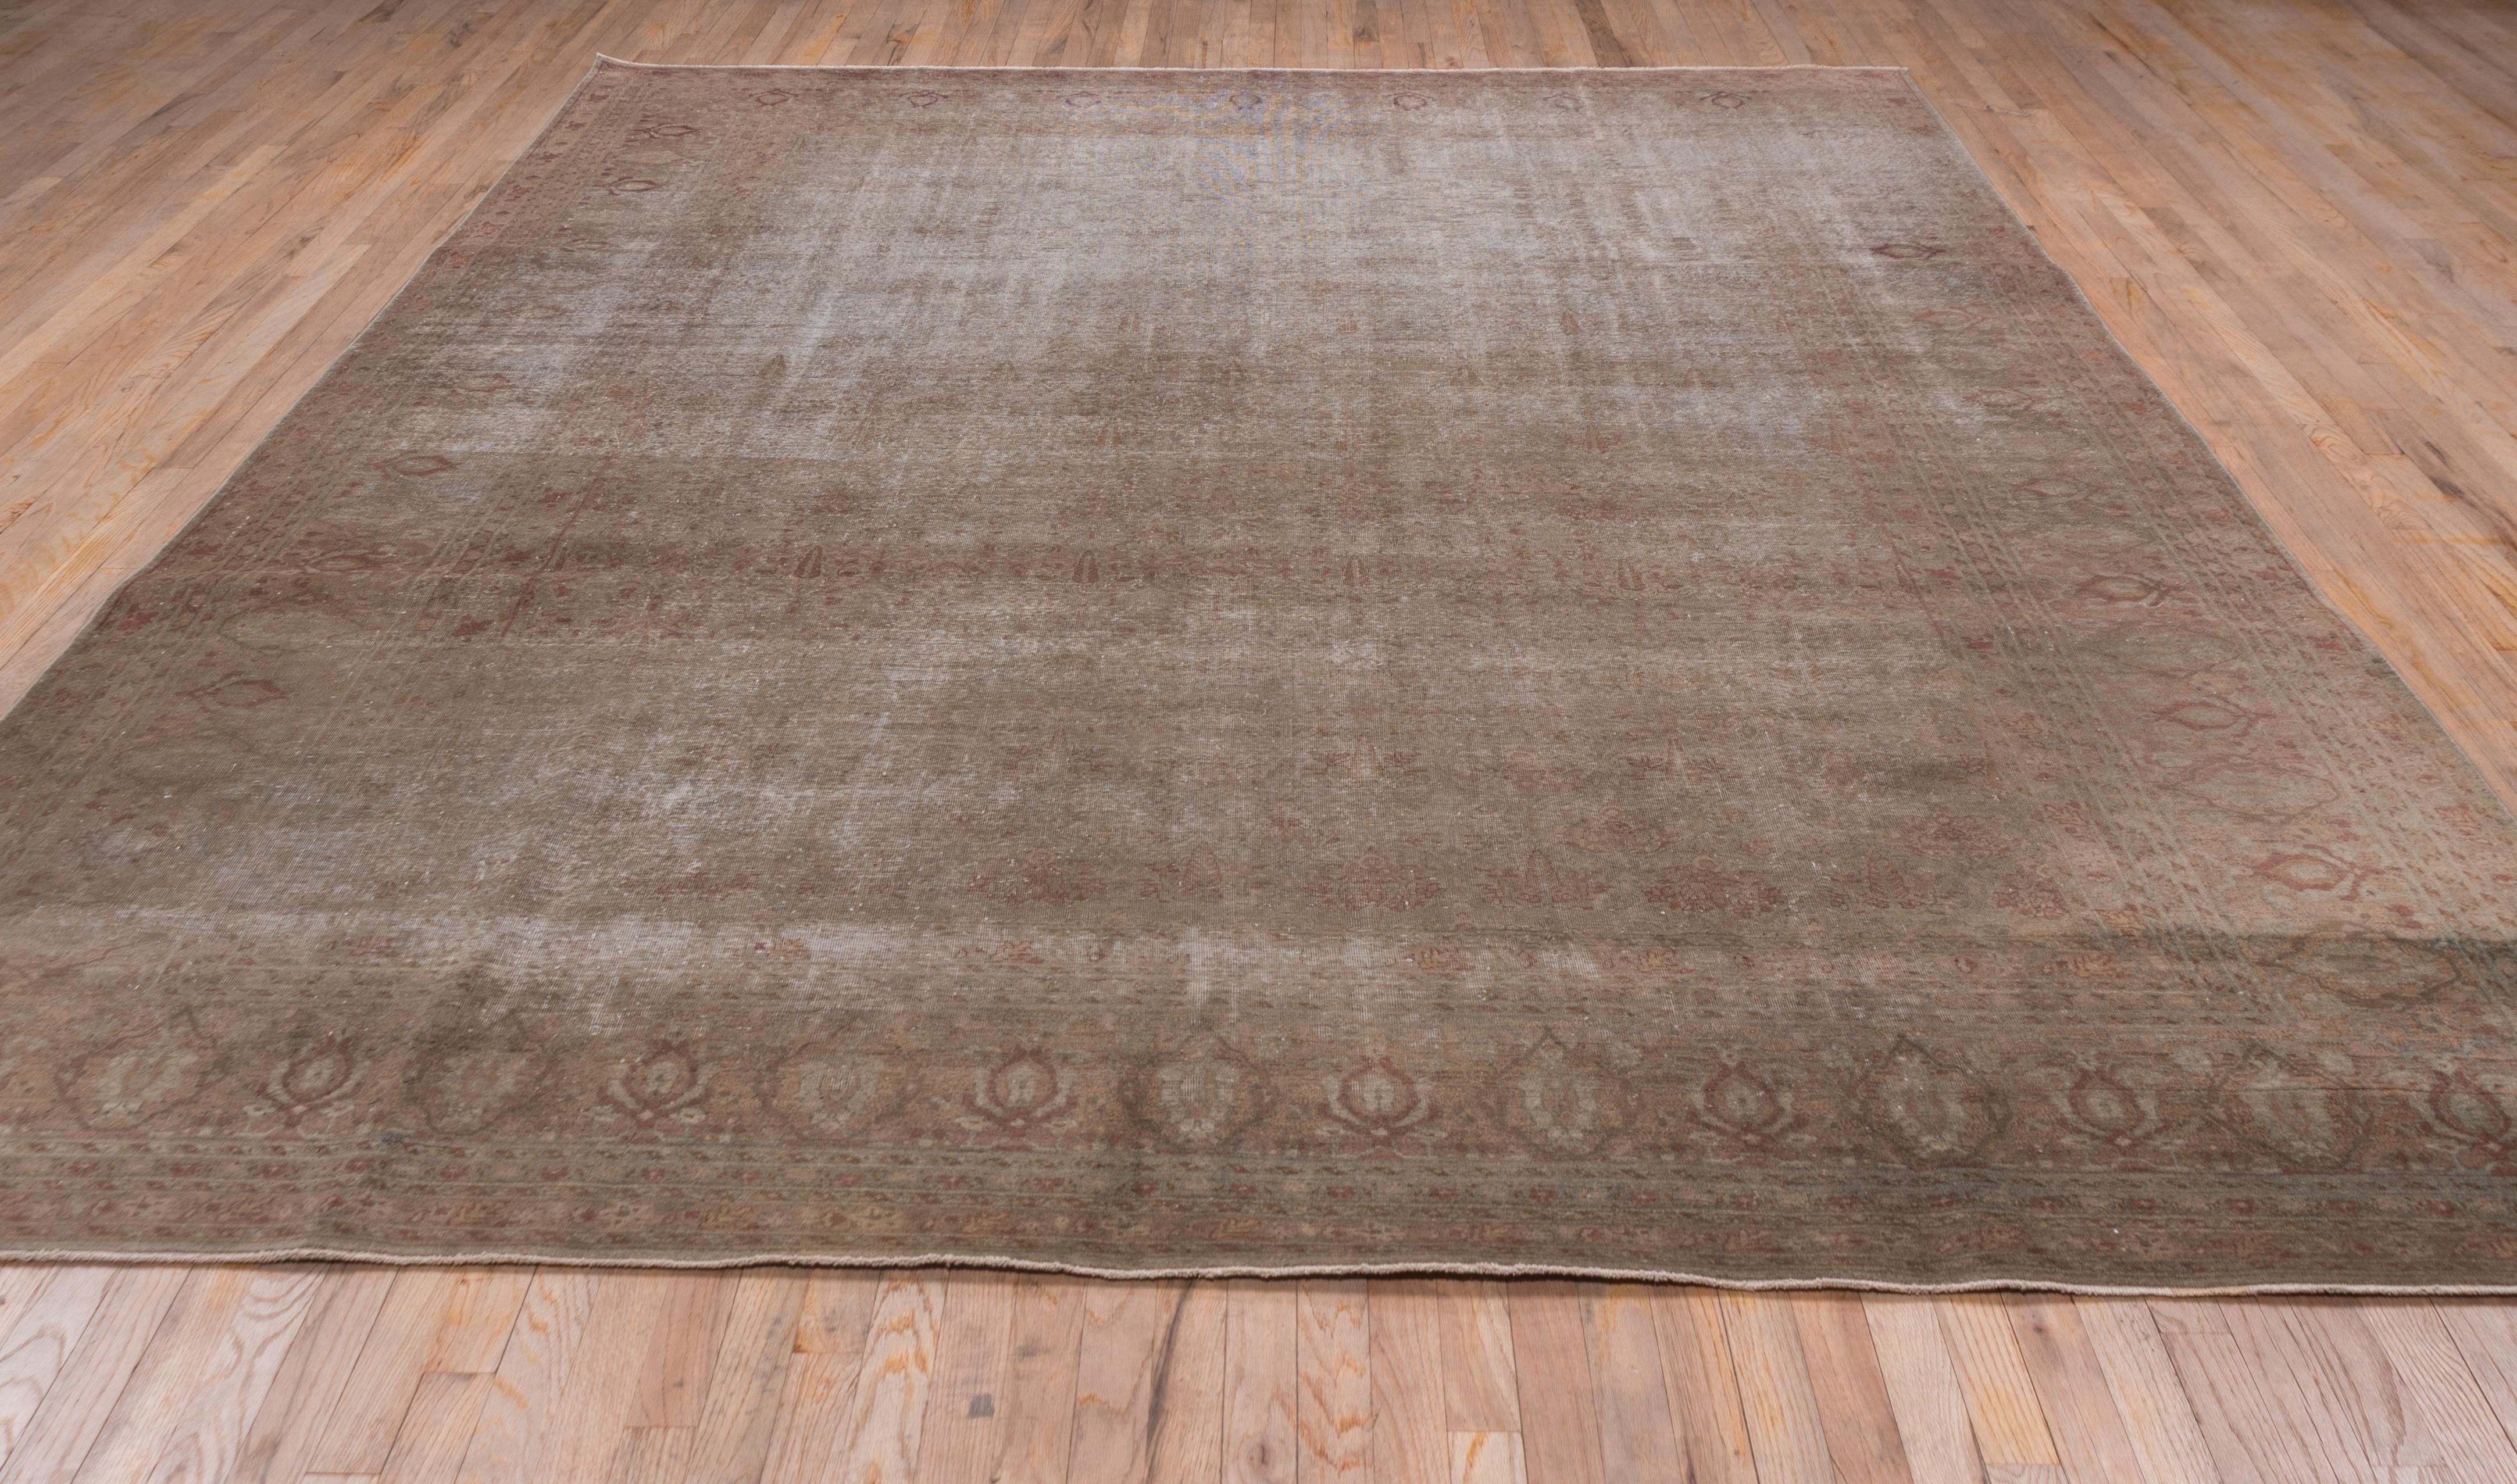 Antique Distressed Indian Amritzar Carpet, circa 1910s, Mauve Field 1